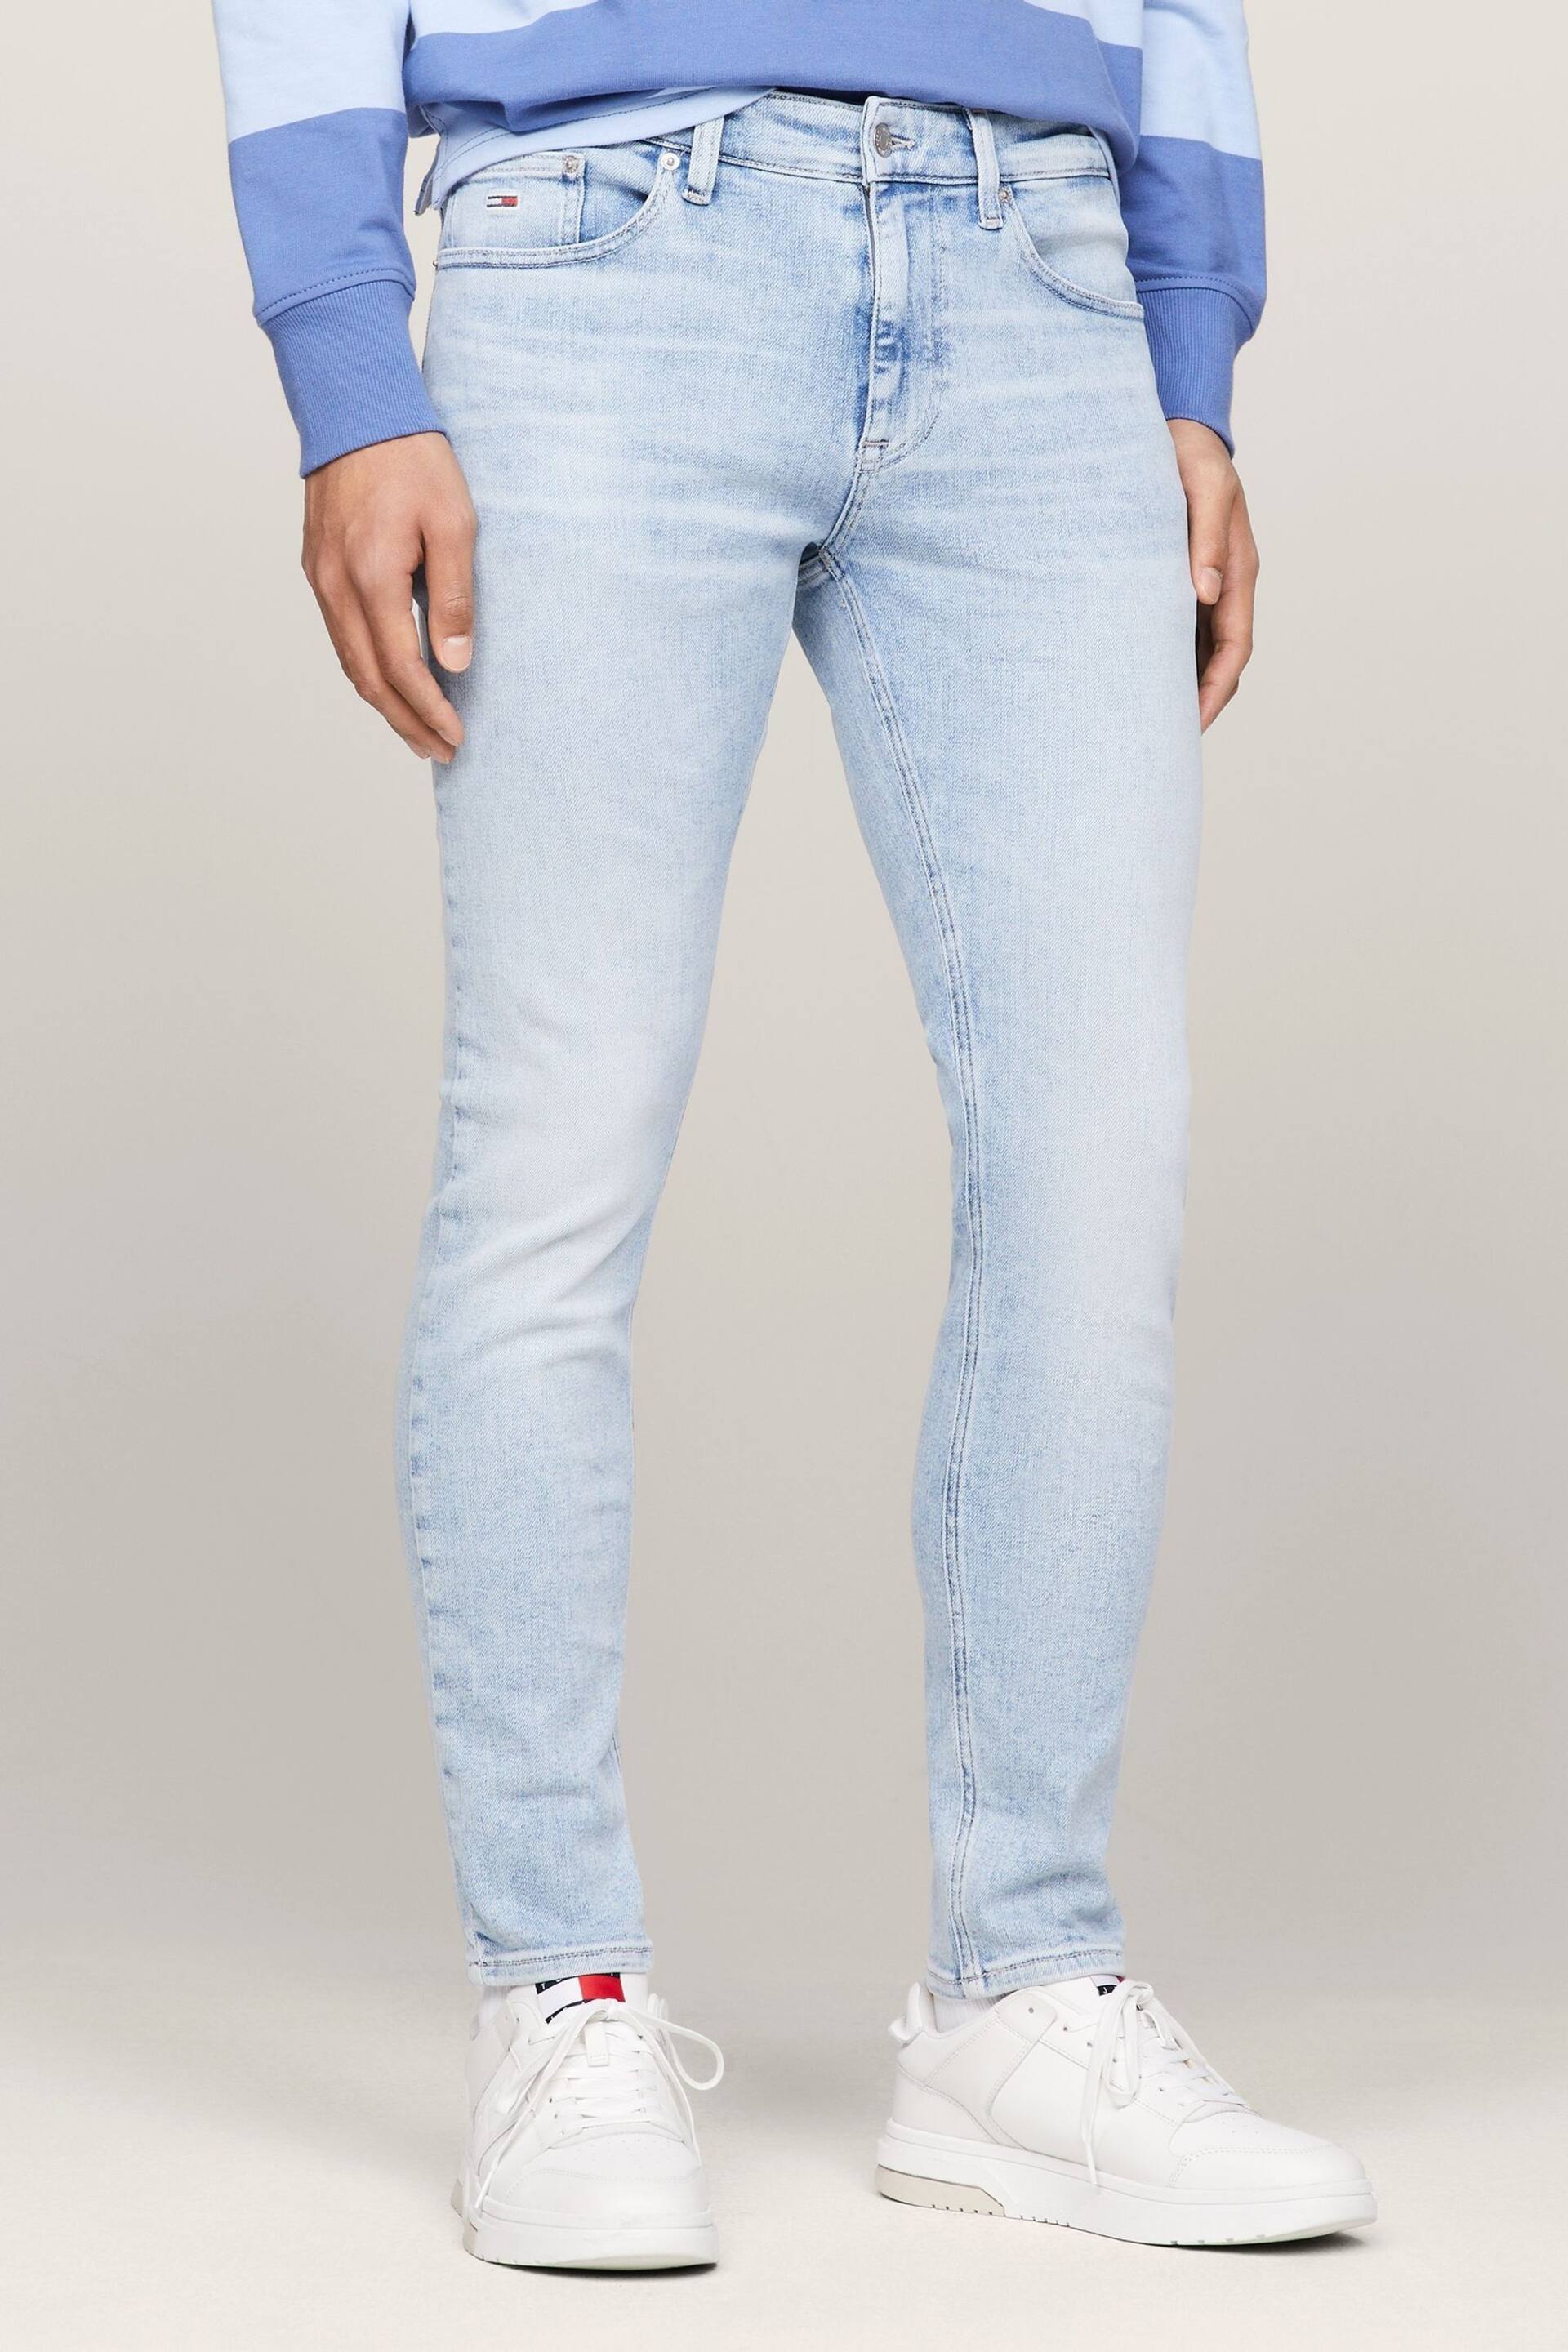 Tommy Jeans Blue Austin Slim Fit Jeans - Image 1 of 6